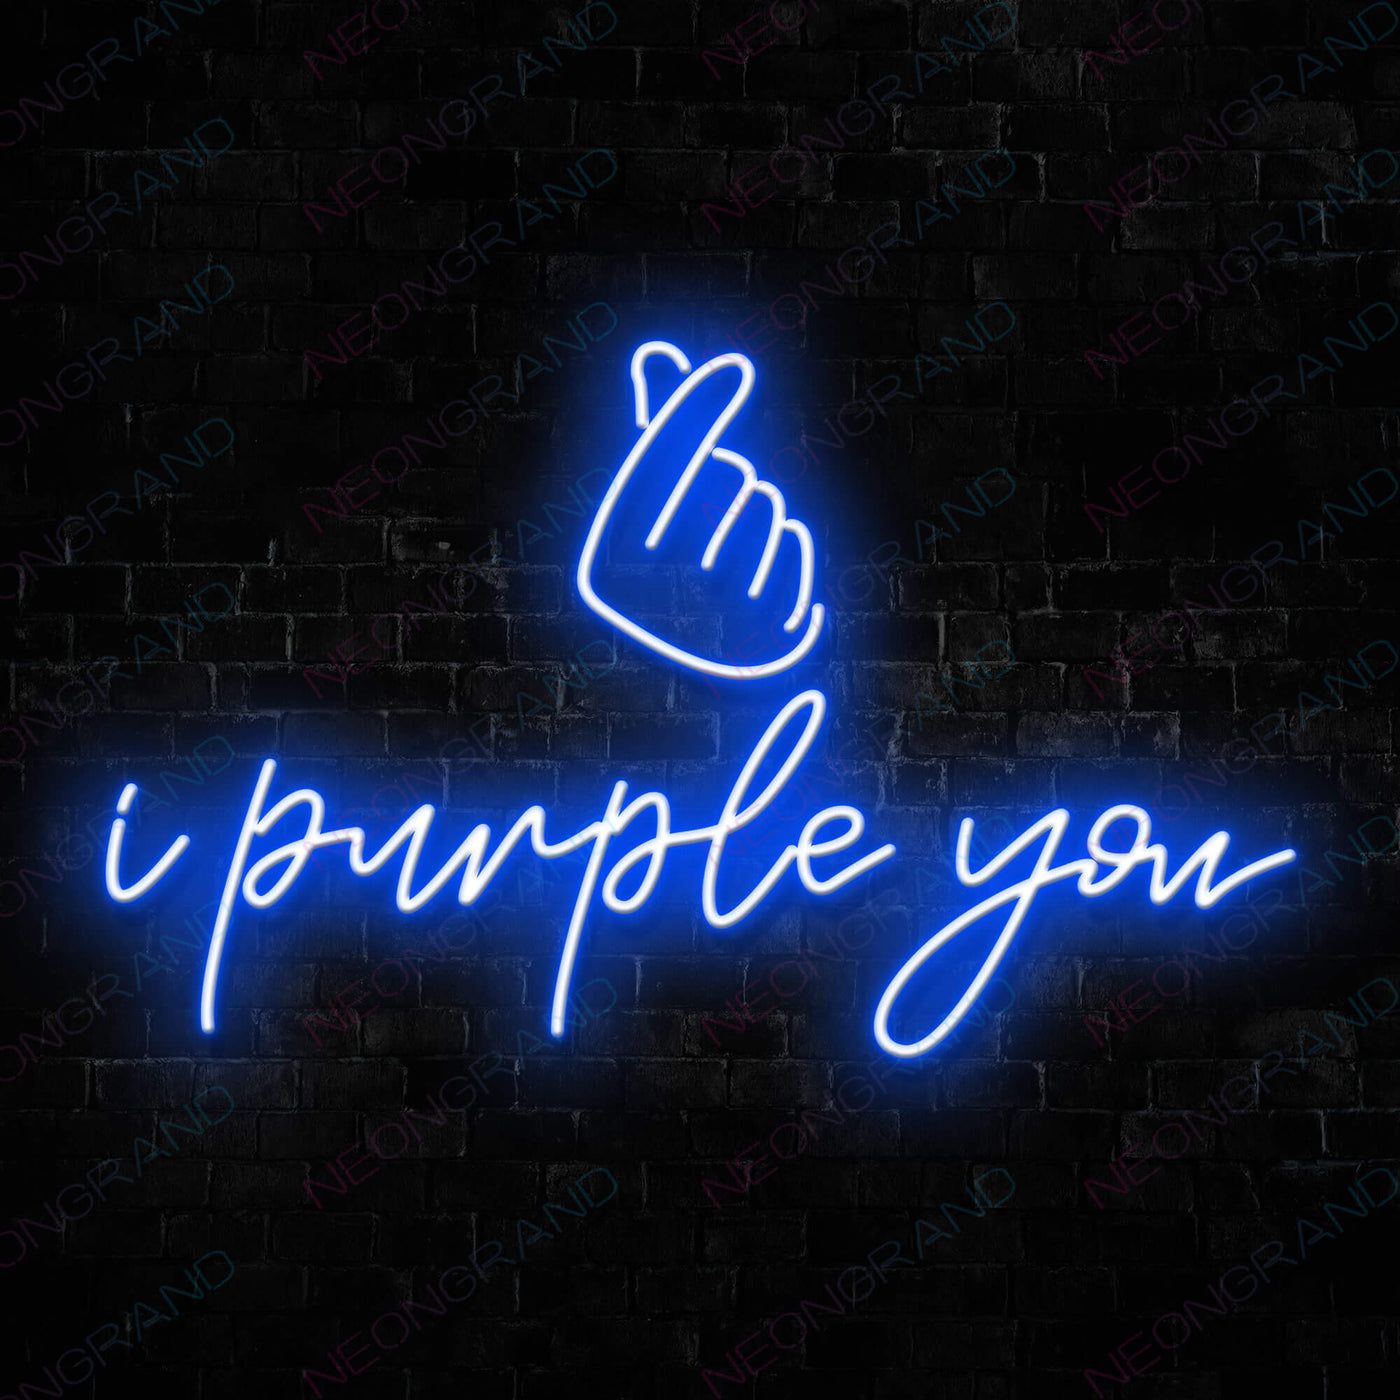 I Purple You Hand BTS Neon Sign Army KPop Led Light Blue